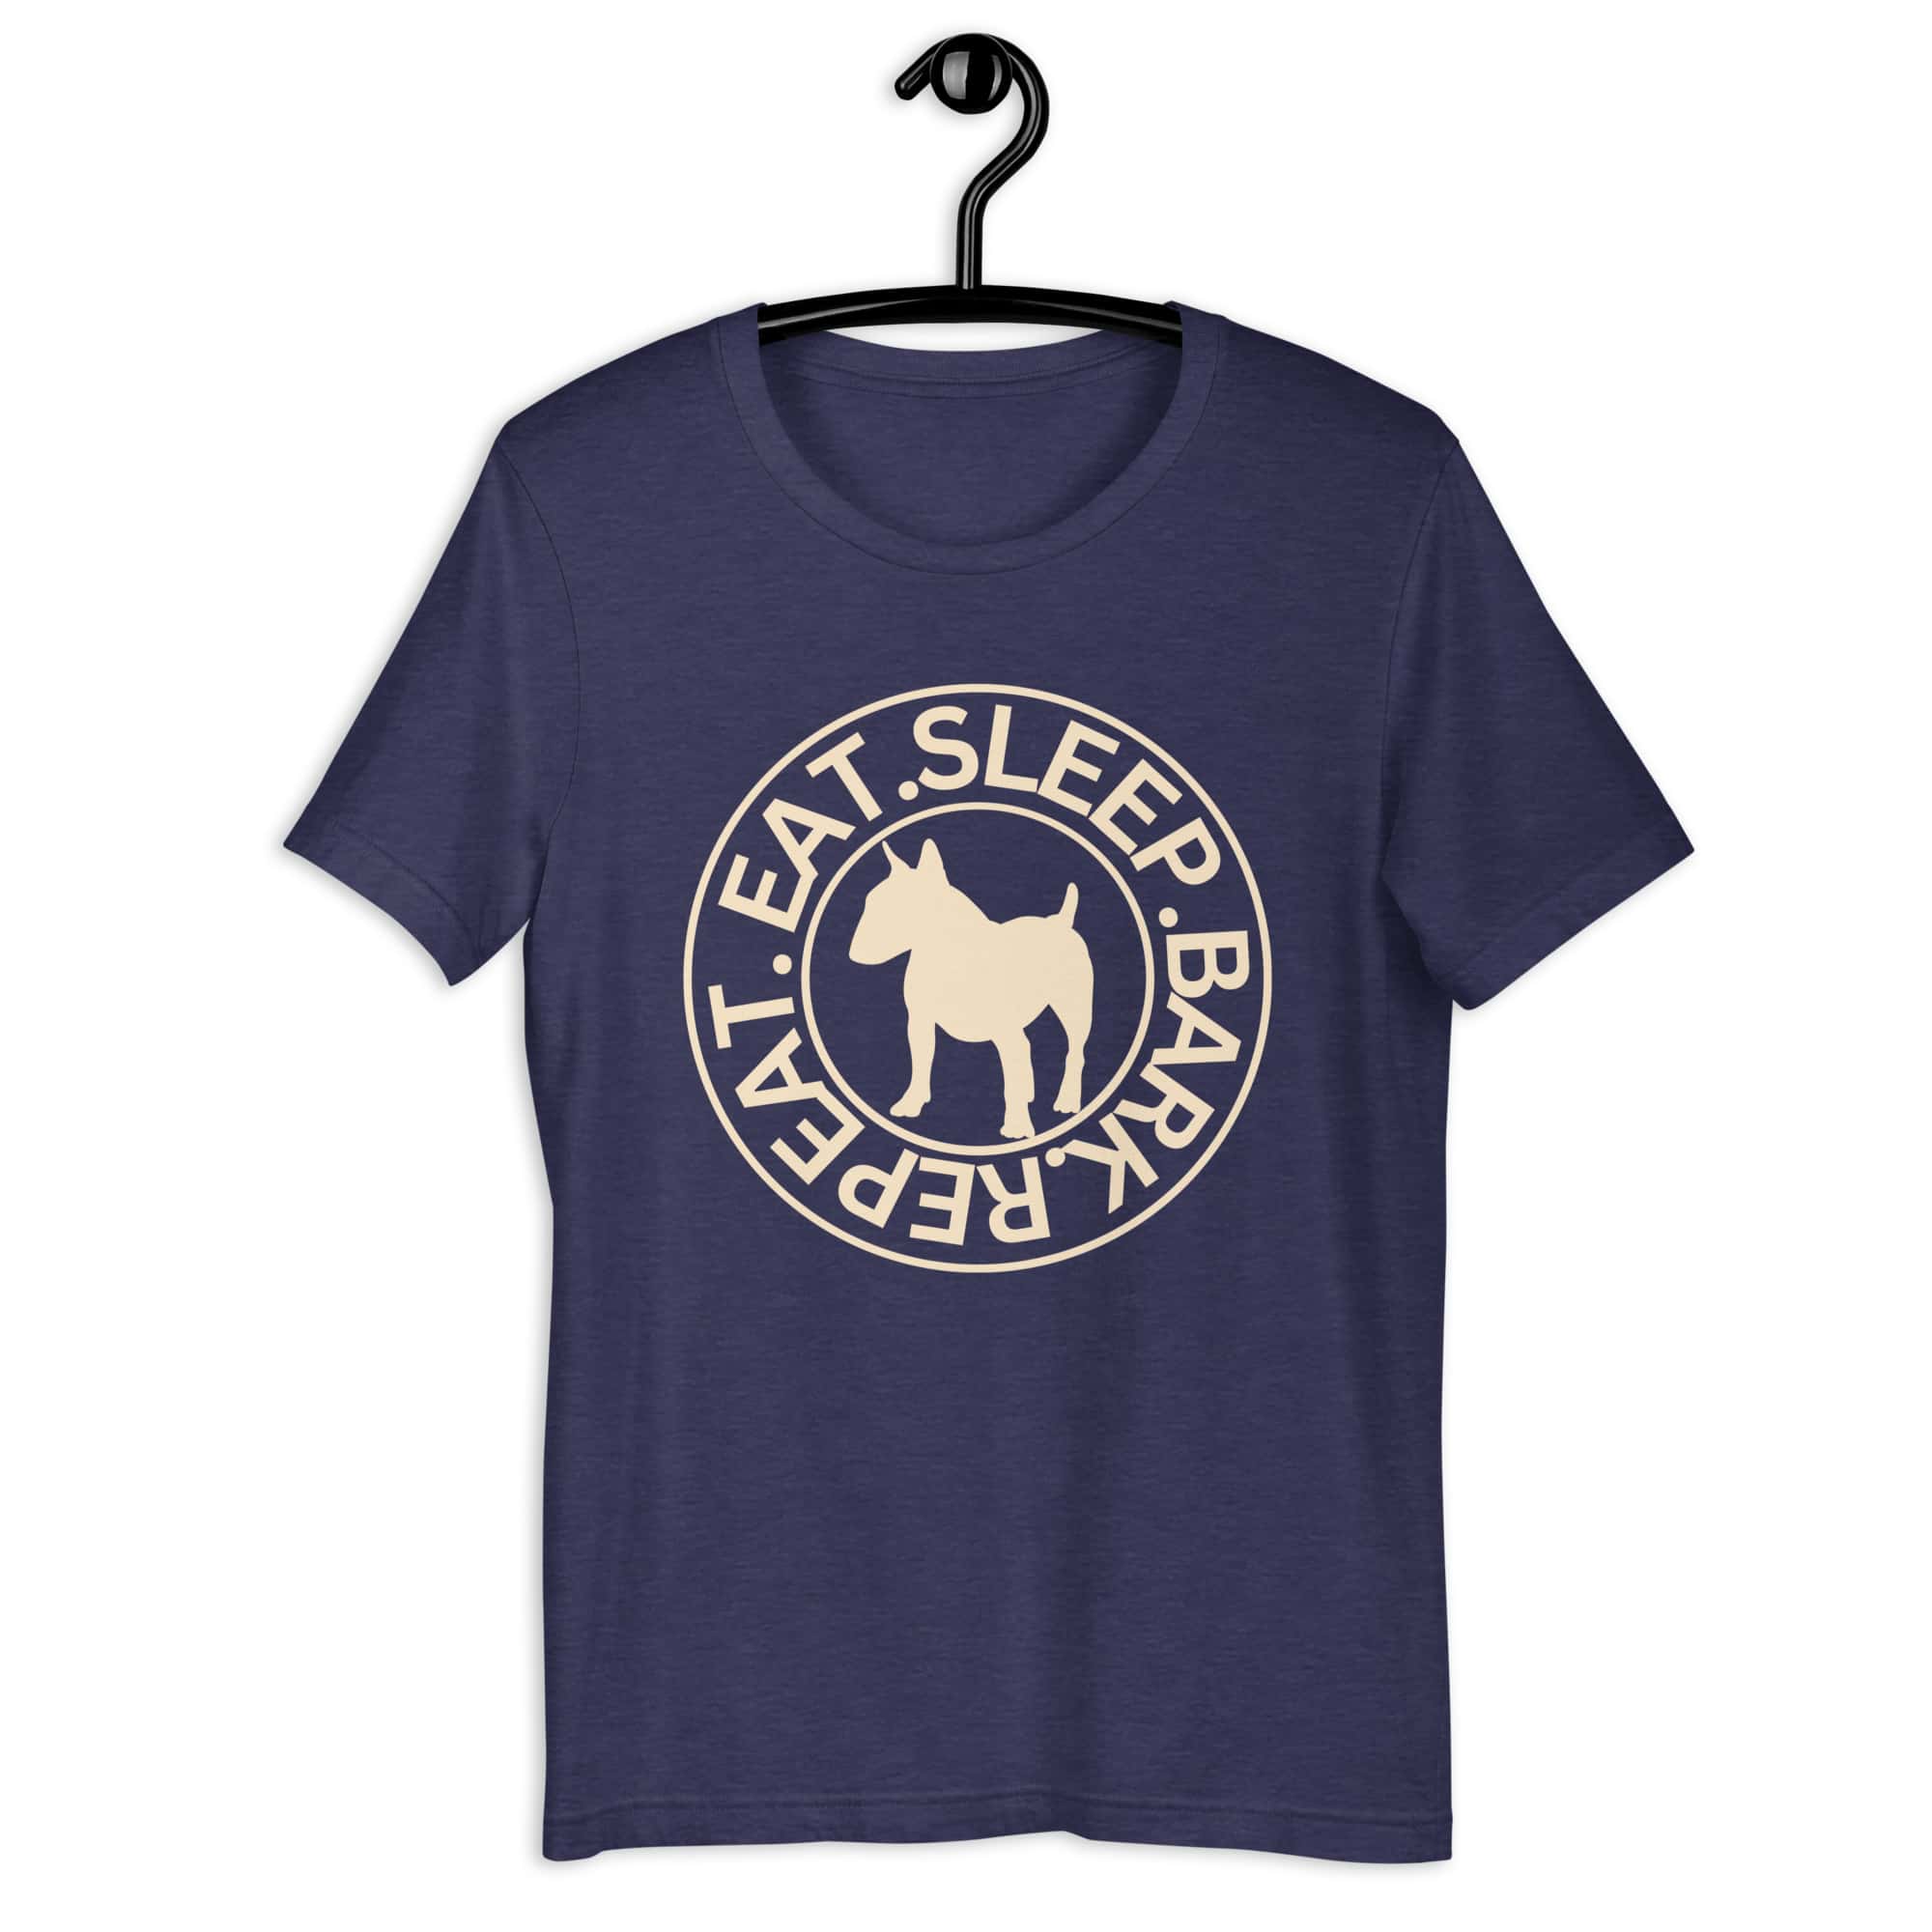 Eat Sleep Bark Repeat Bull Terrier Unisex T-Shirt. Heather Midnight Navy